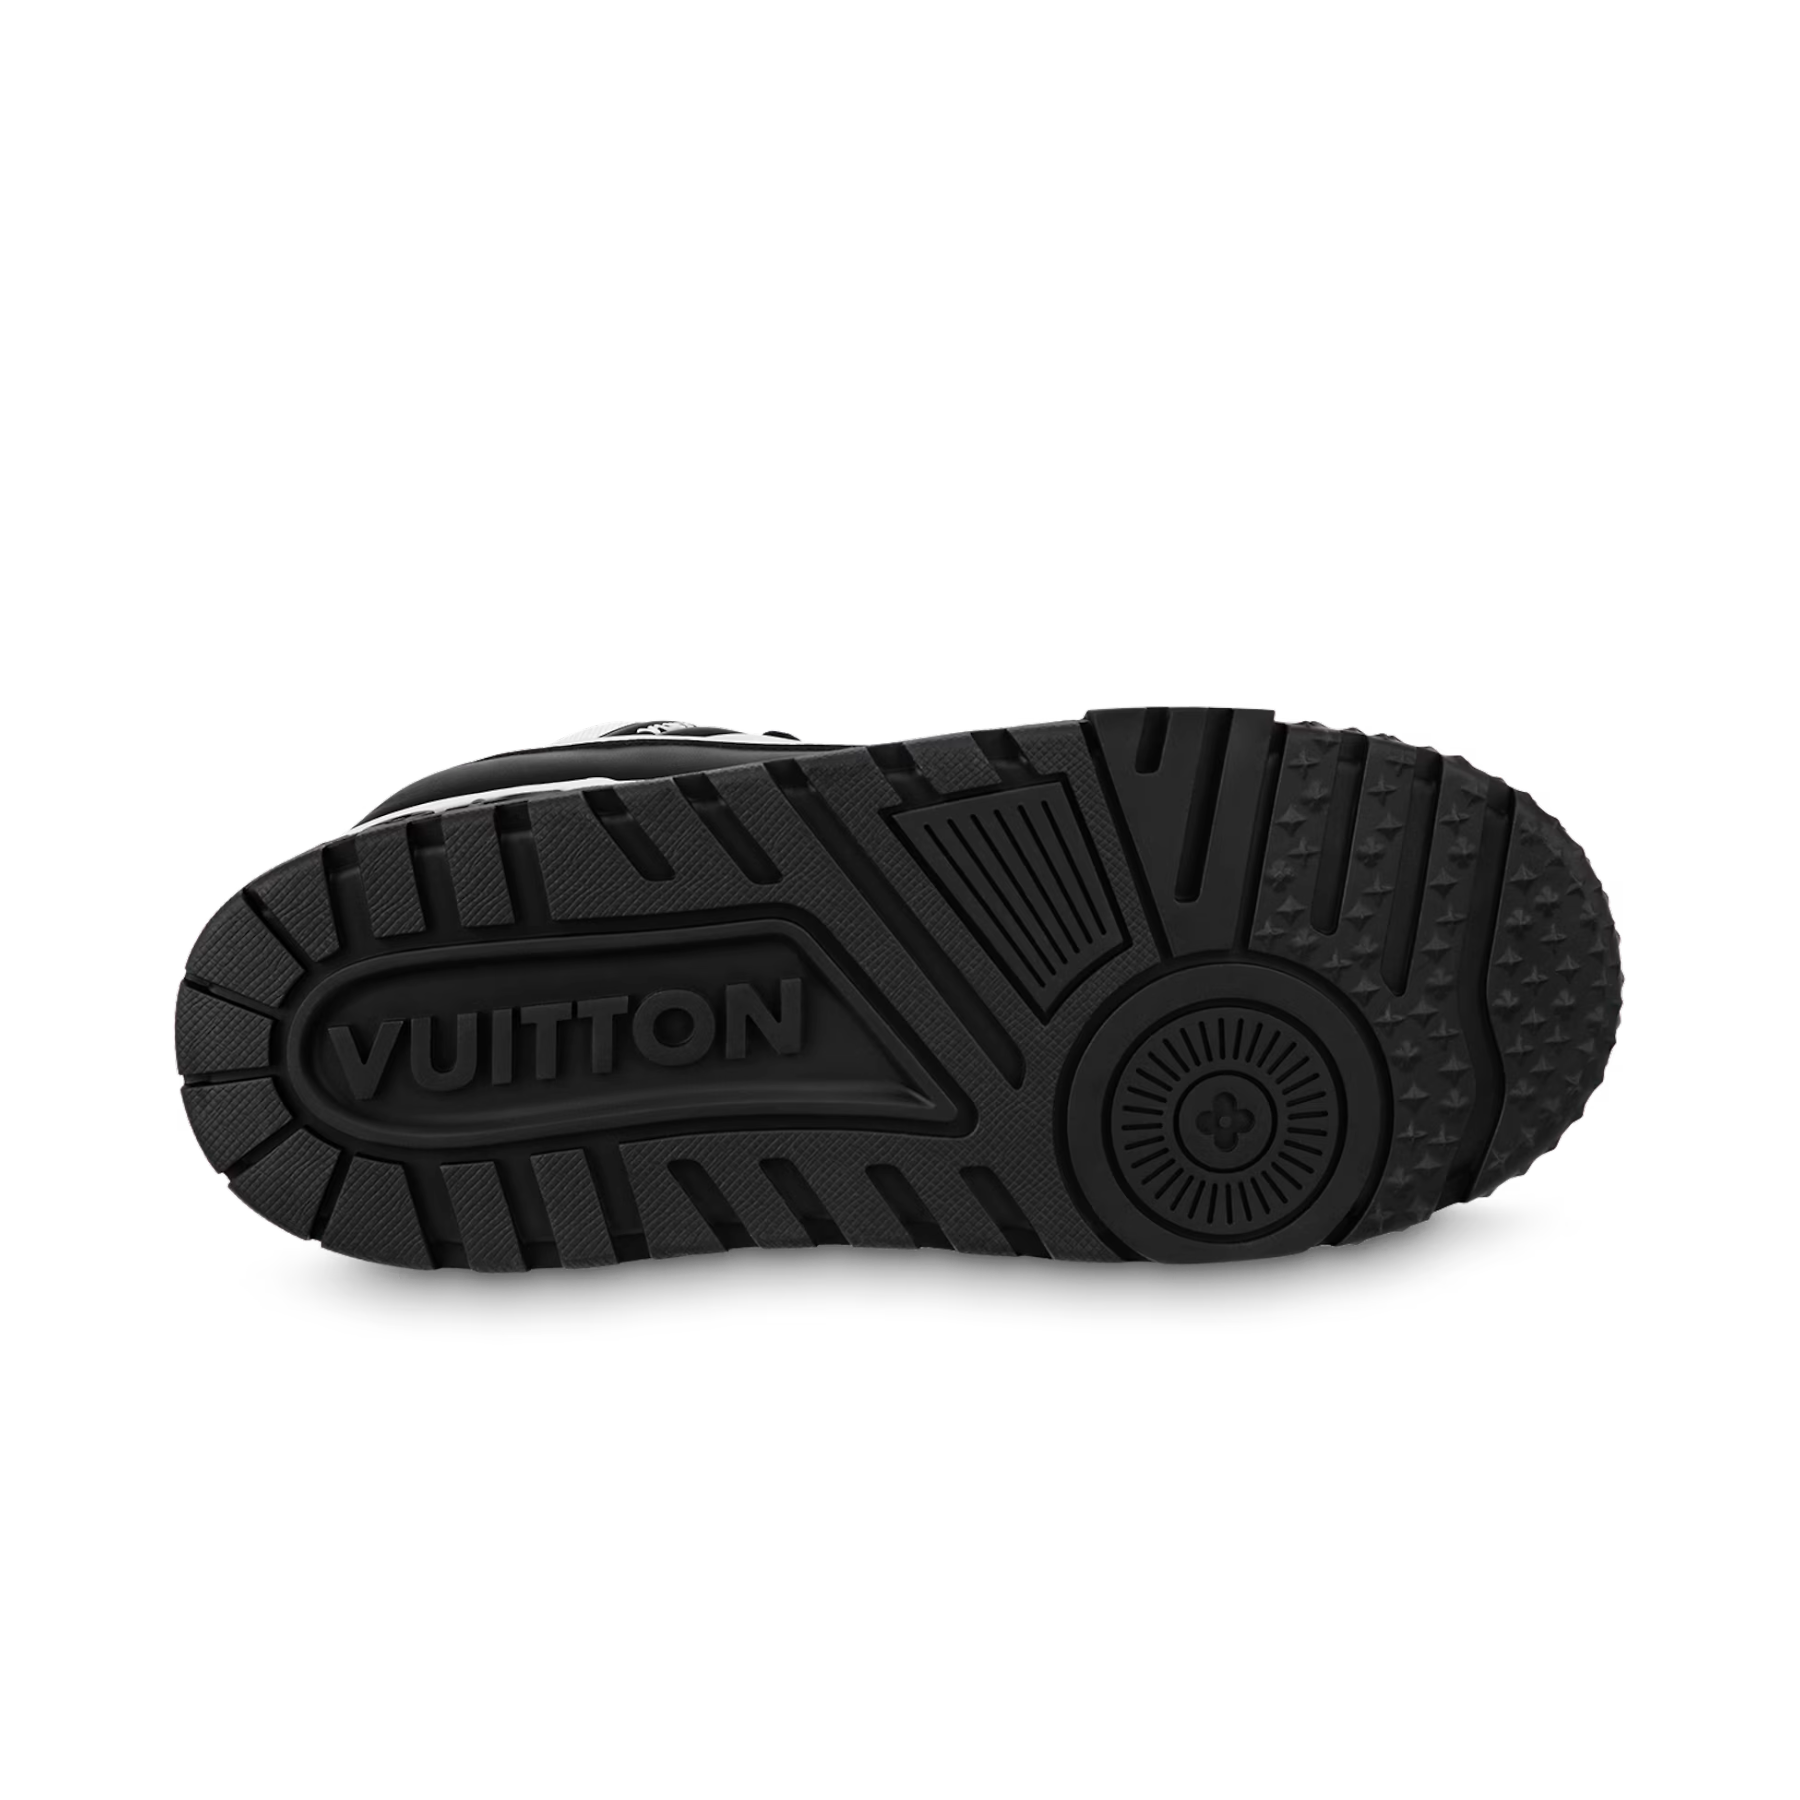 Louis Vuitton LV Trainer 2 Sneaker Grey. Size 09.5